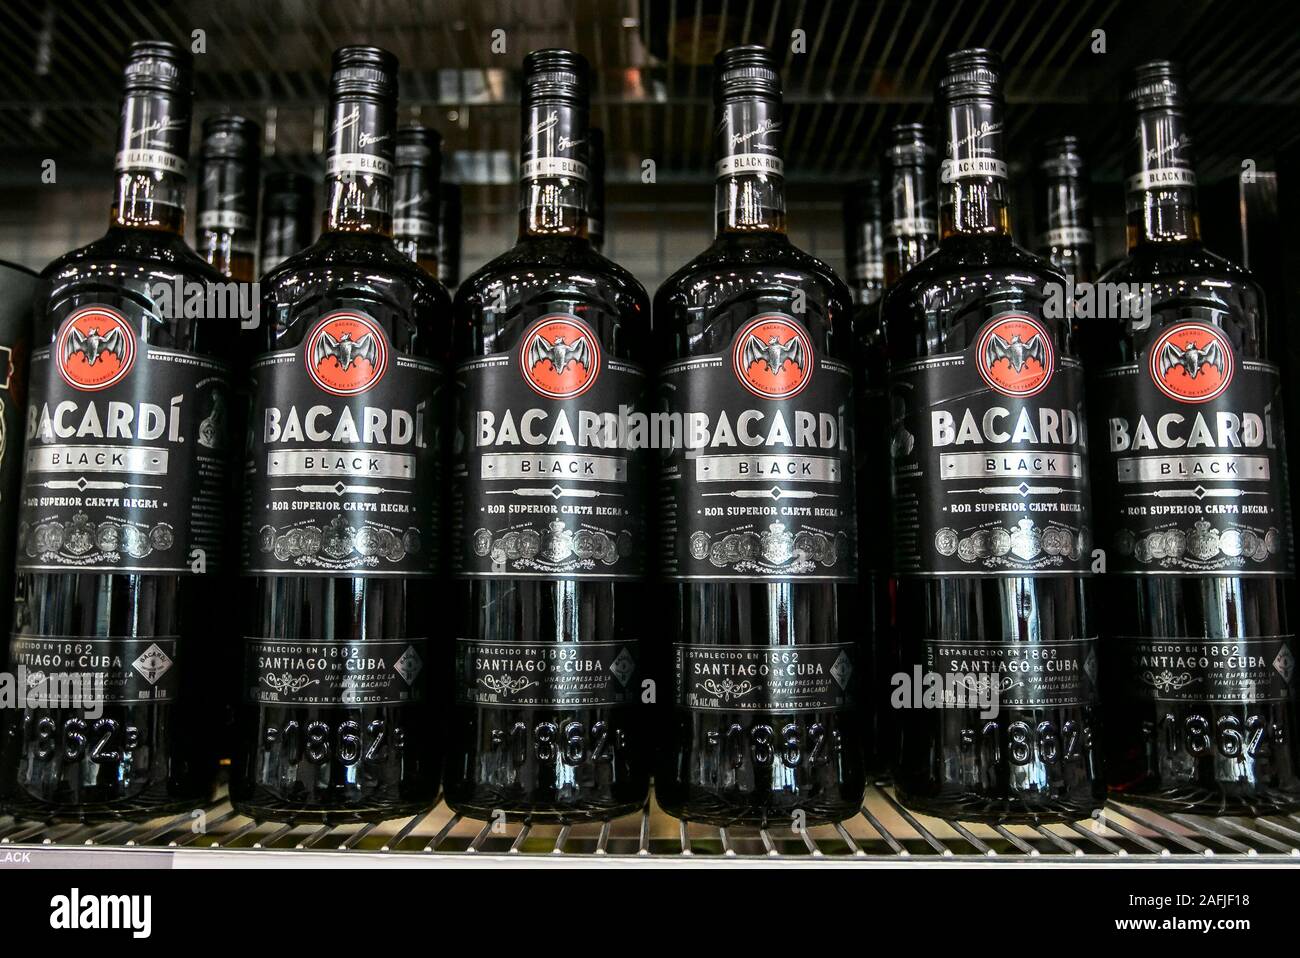 Aruba, 12/2/2019: Bottles of Bacardi Black rum stand on a shelf in a liquor store. Stock Photo